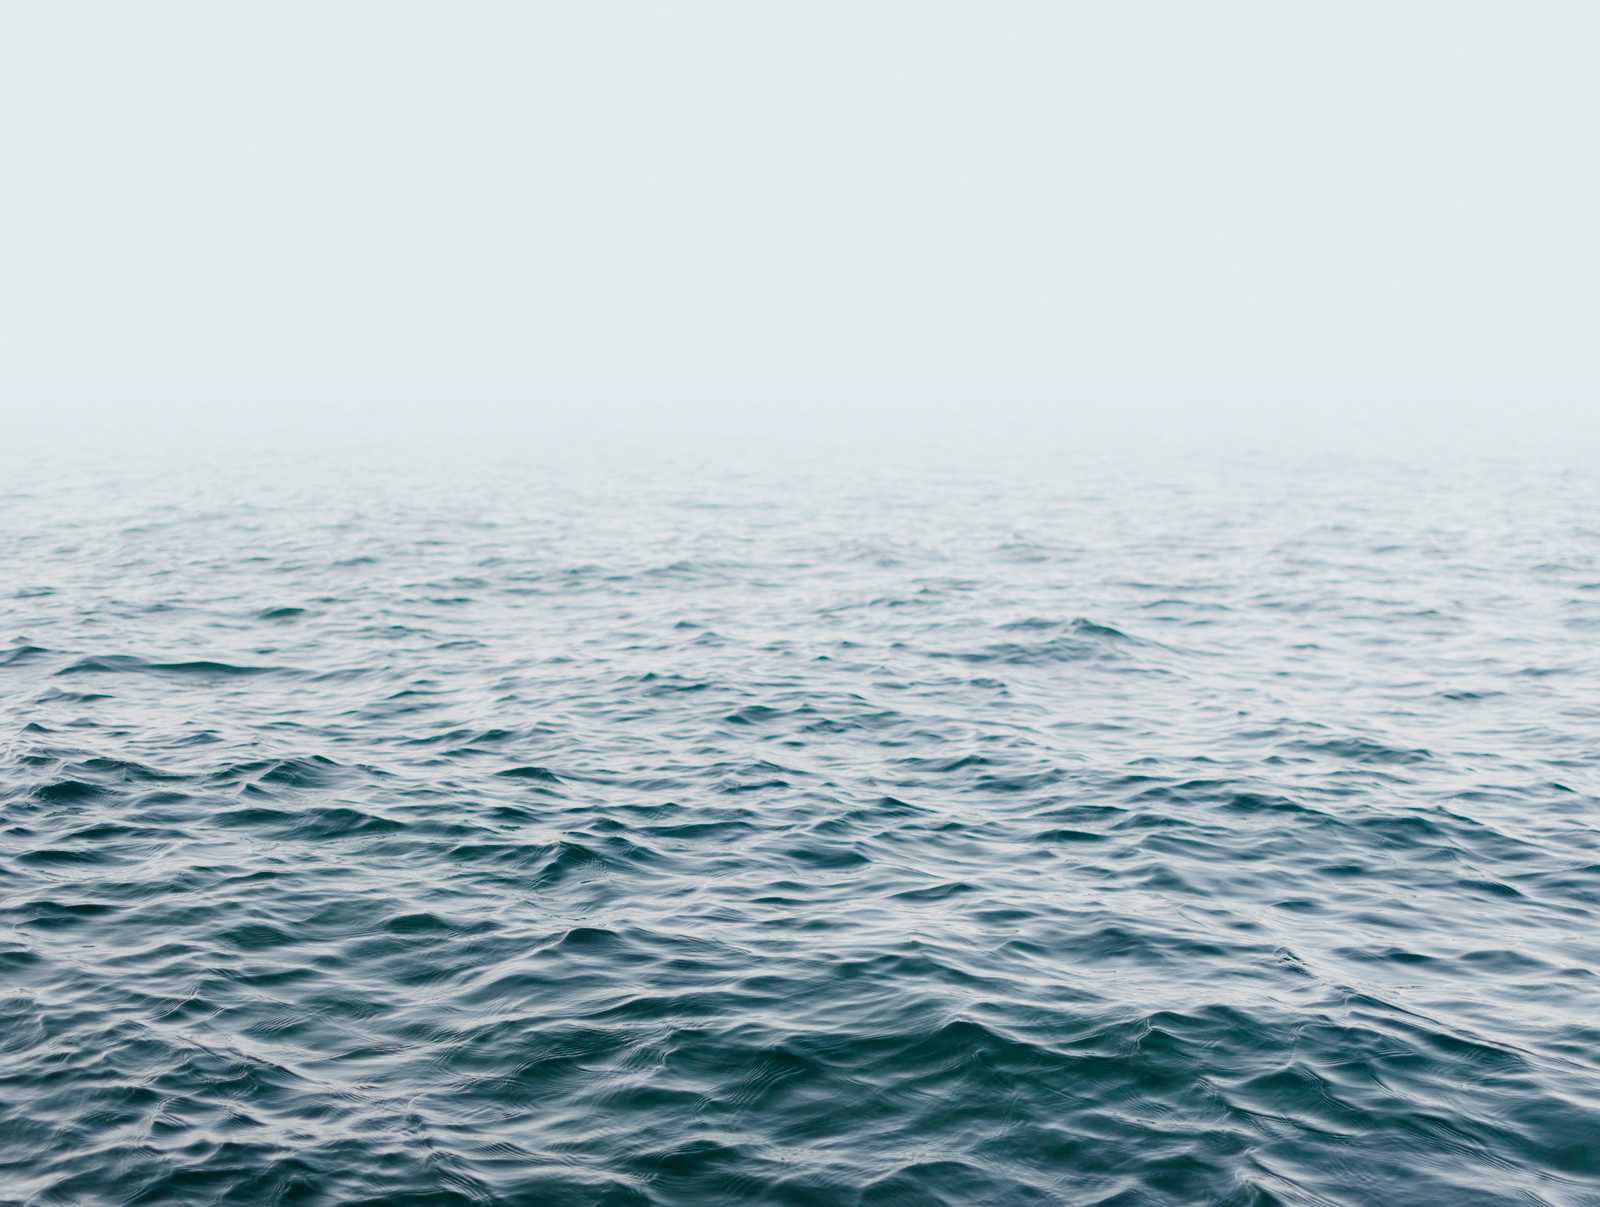             Tapeten-Neuheit | Motivtapete Meer ohne Horizont, Blautöne
        